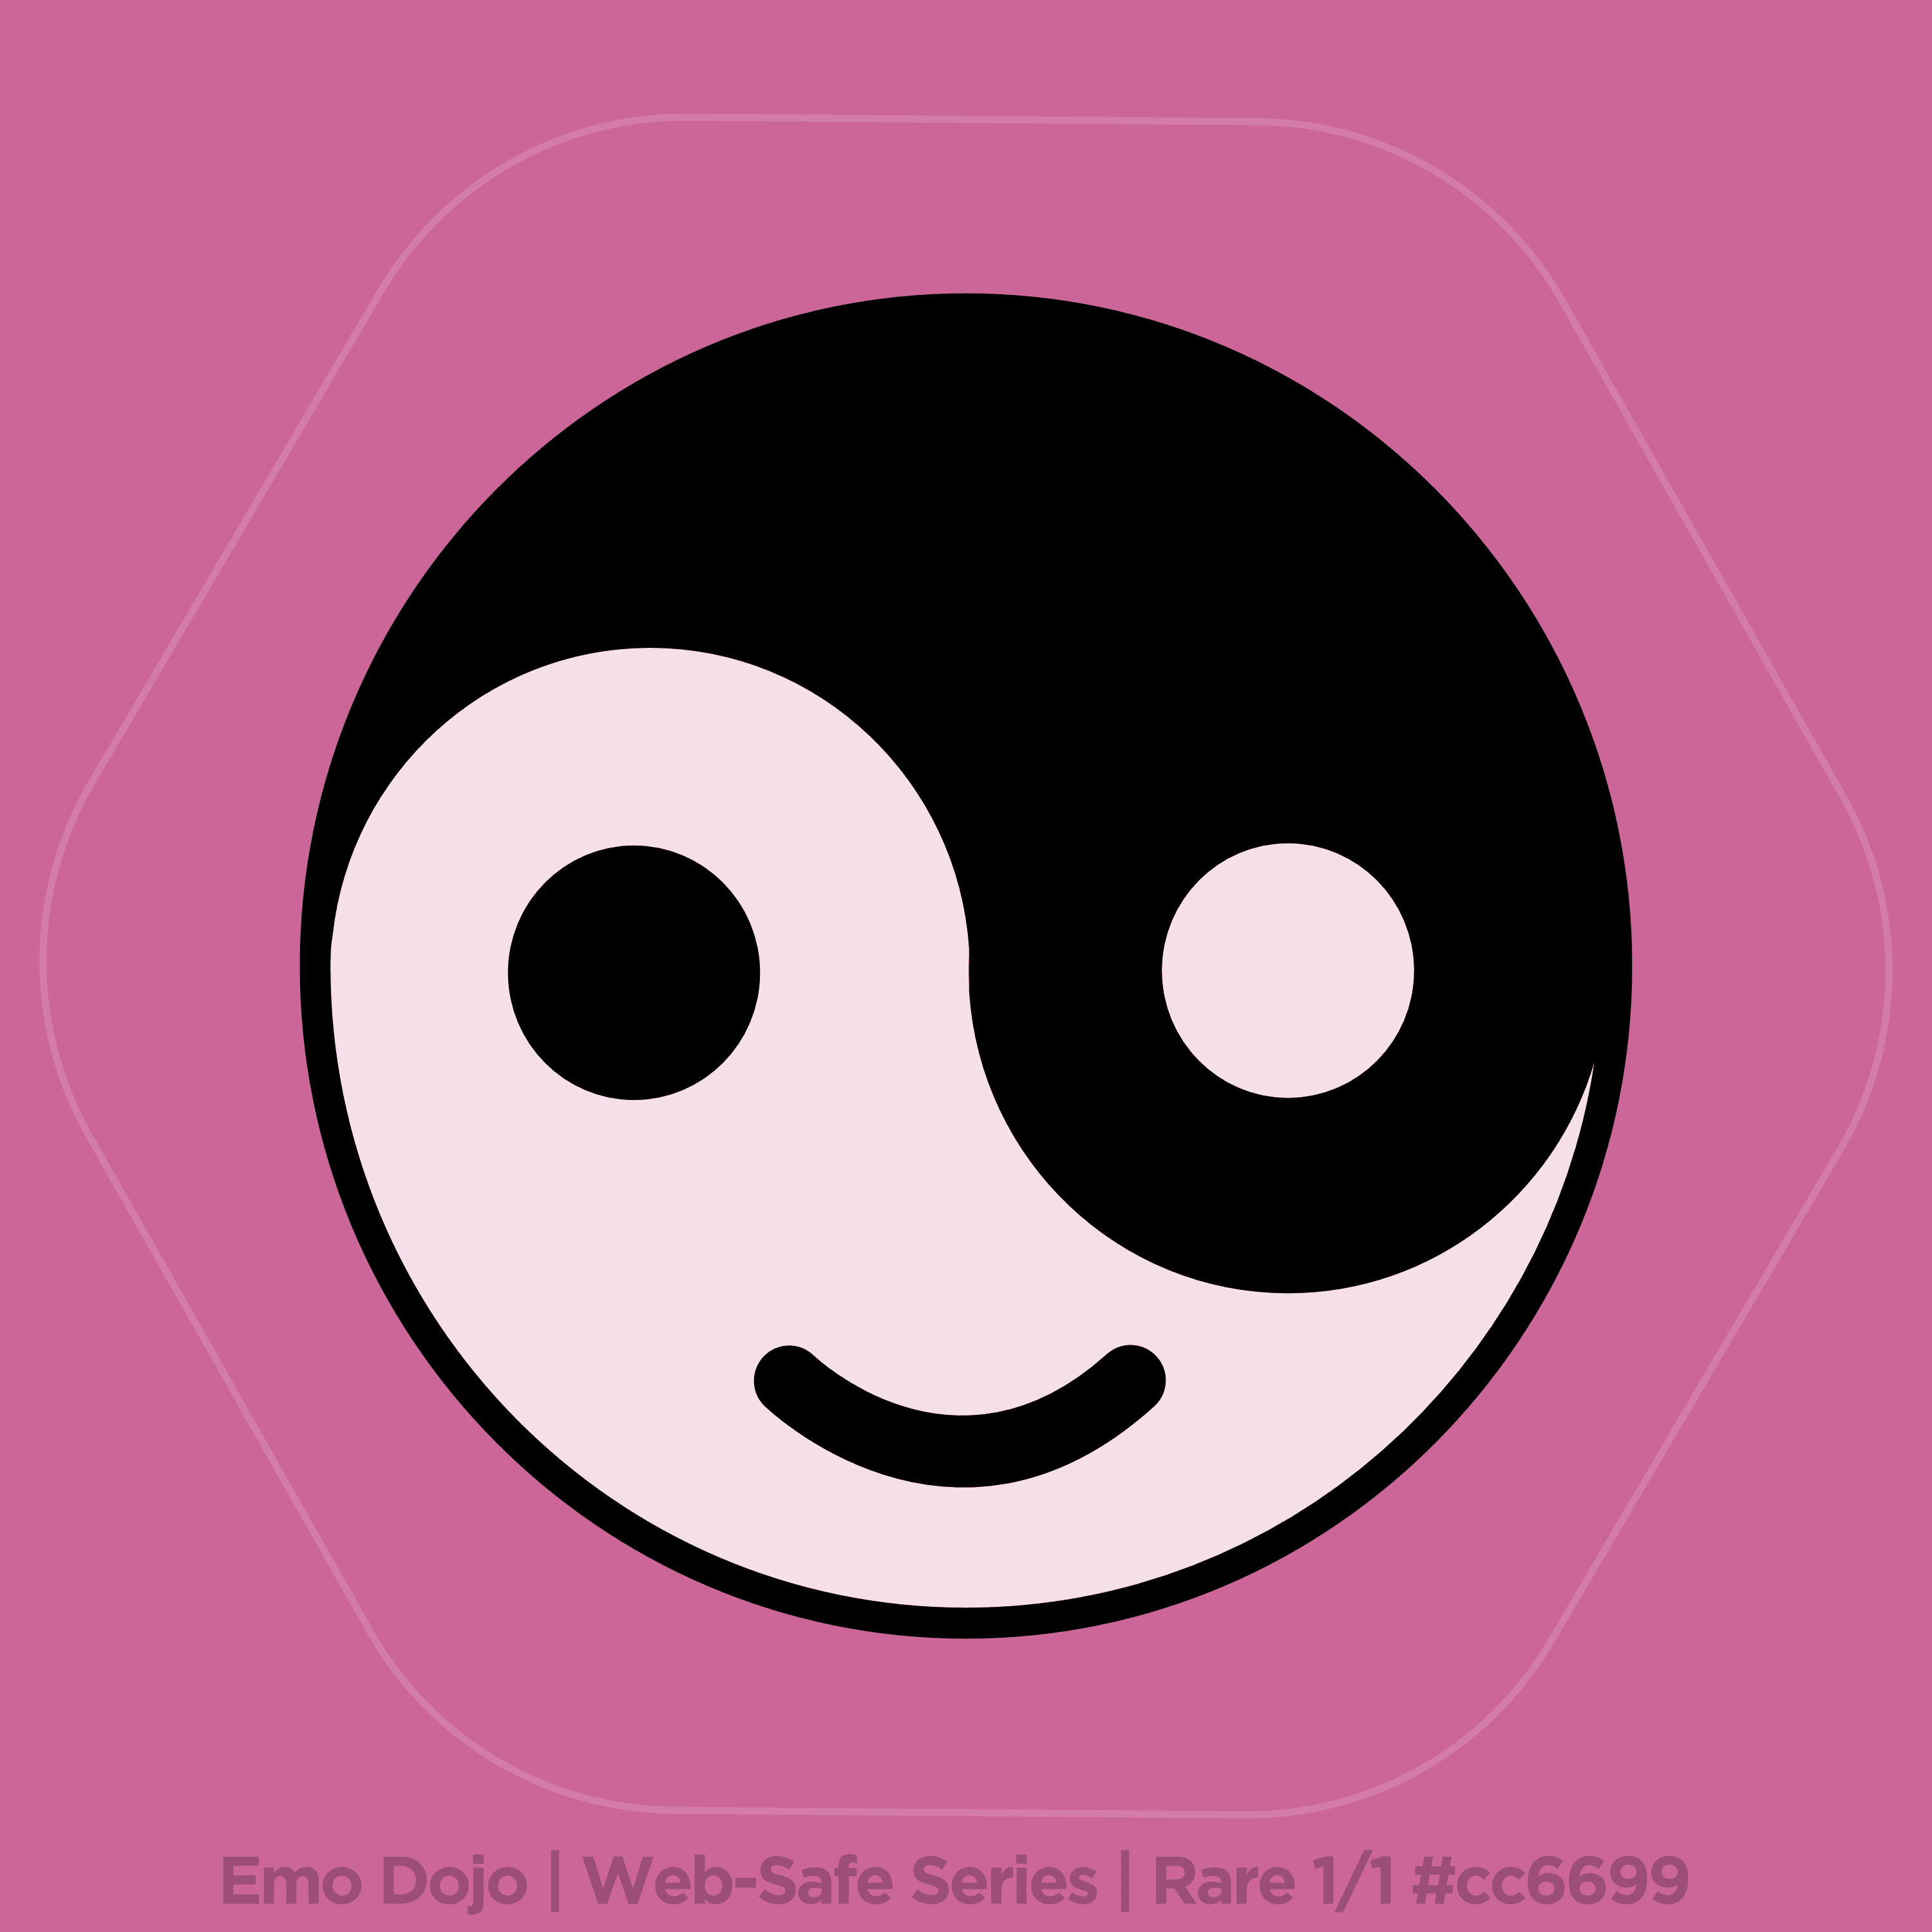 Emo Dojo | Web-Safe Series | Rare 1/1 #cc6699